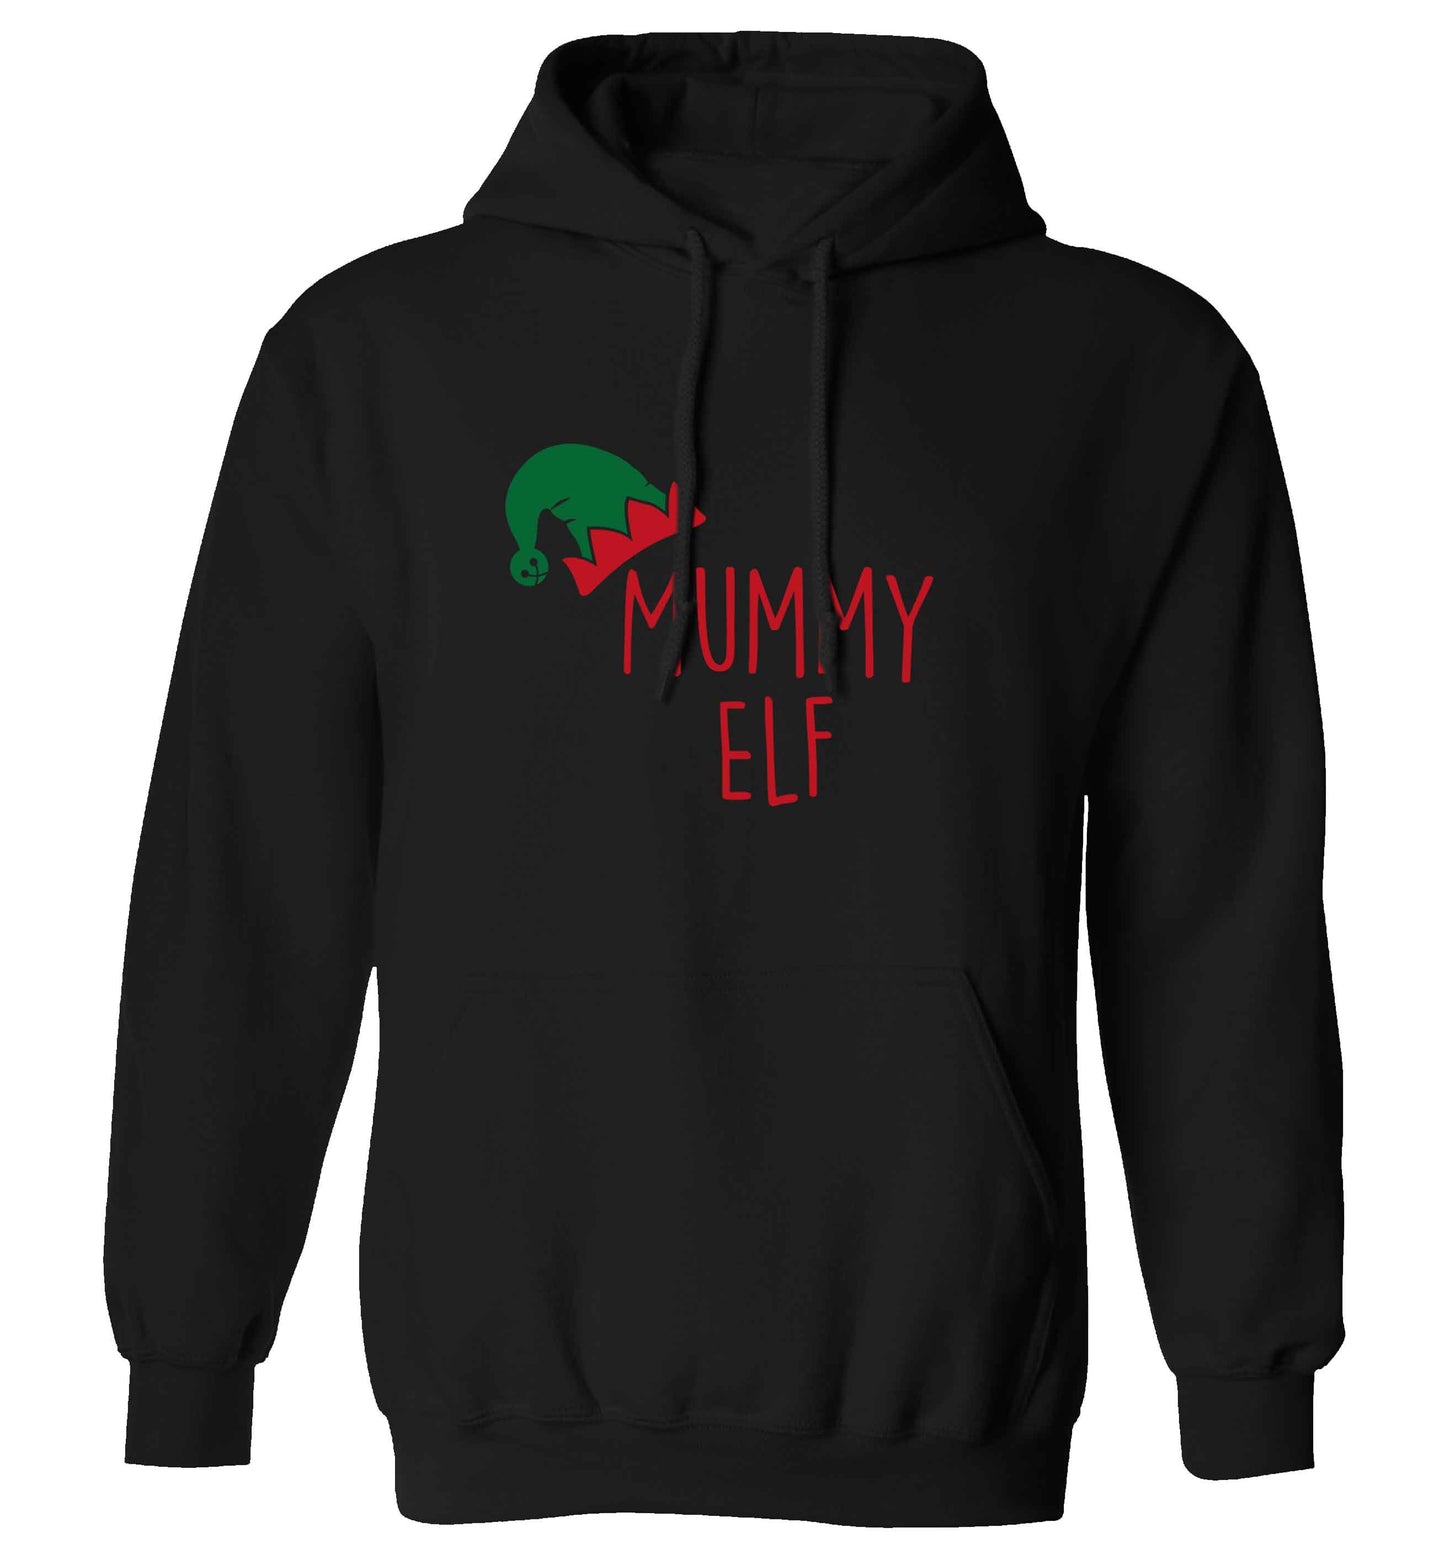 Mummy elf adults unisex black hoodie 2XL